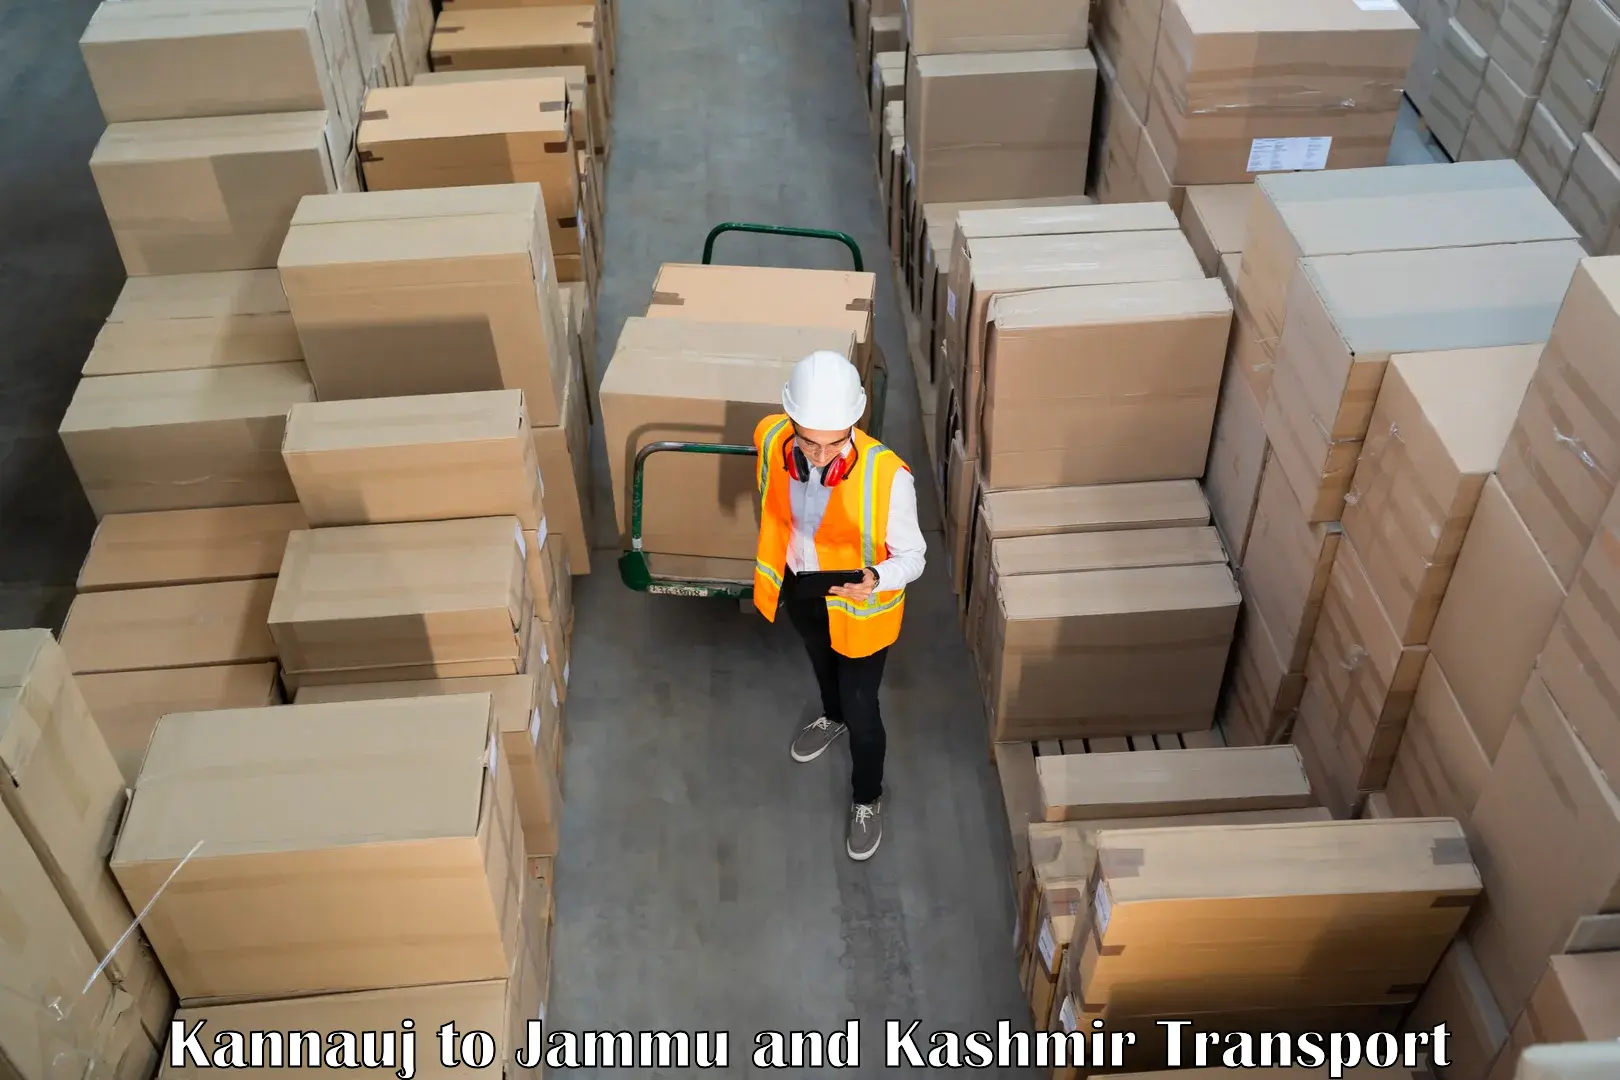 Shipping partner Kannauj to Katra